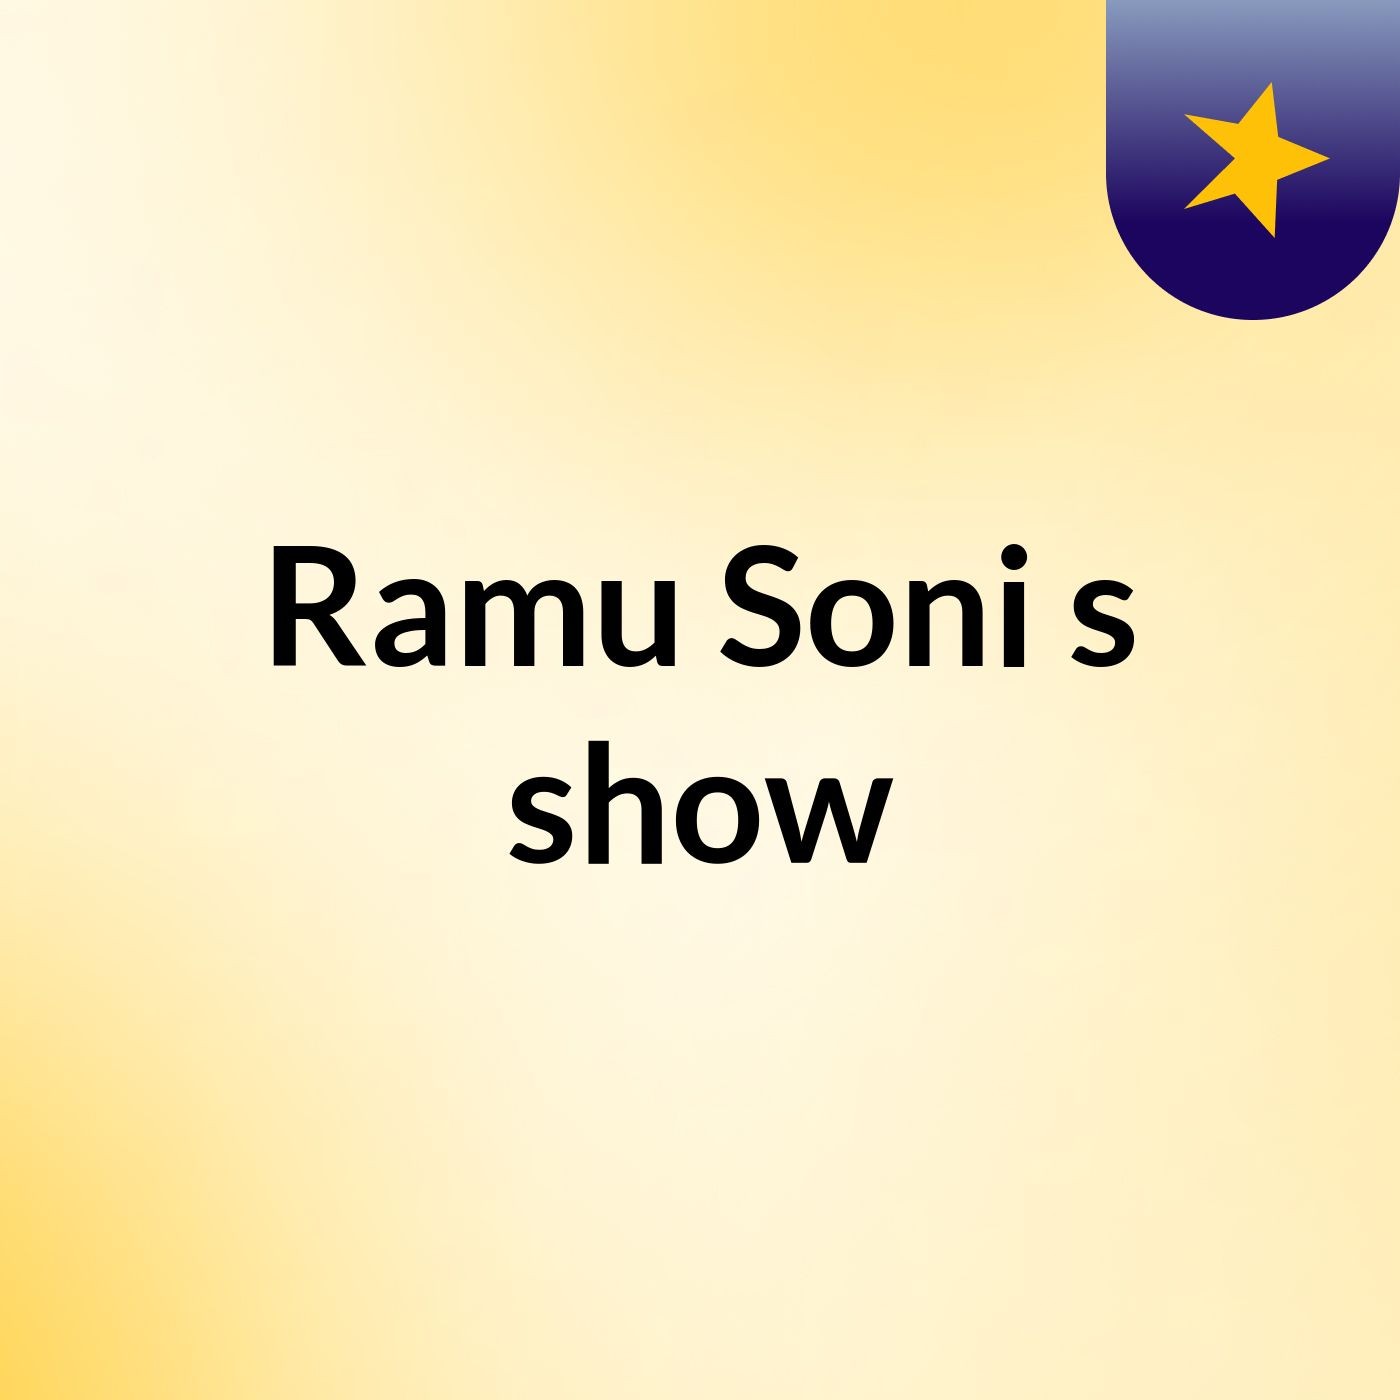 Ramu Soni's show